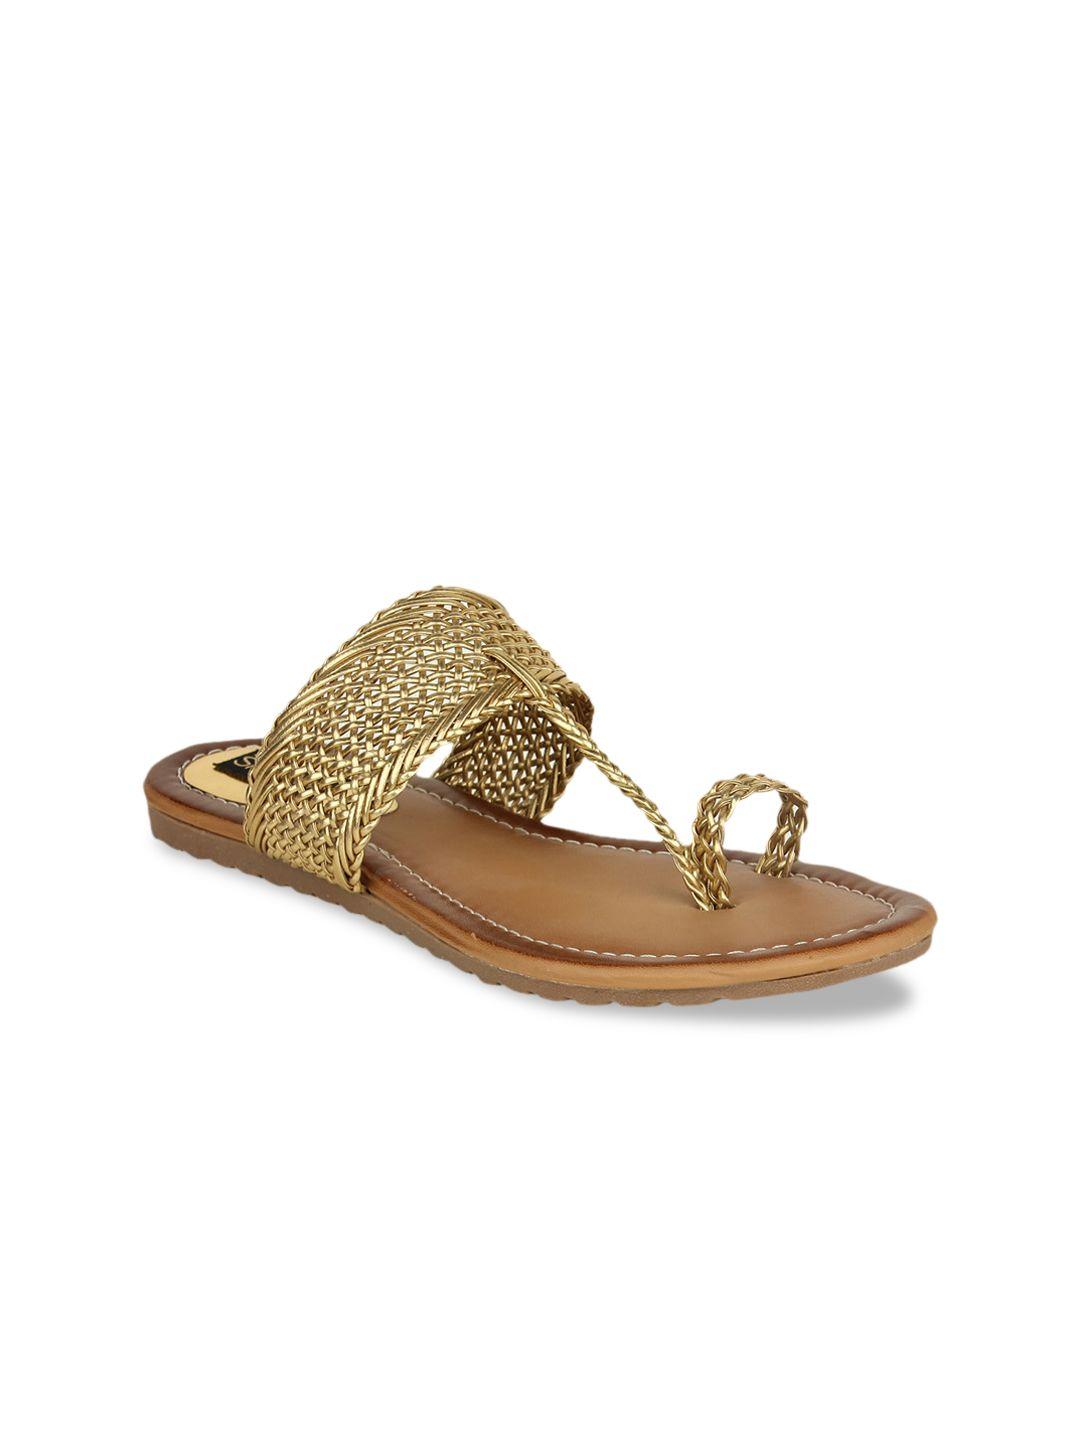 shoetopia women gold-toned woven design one toe flats